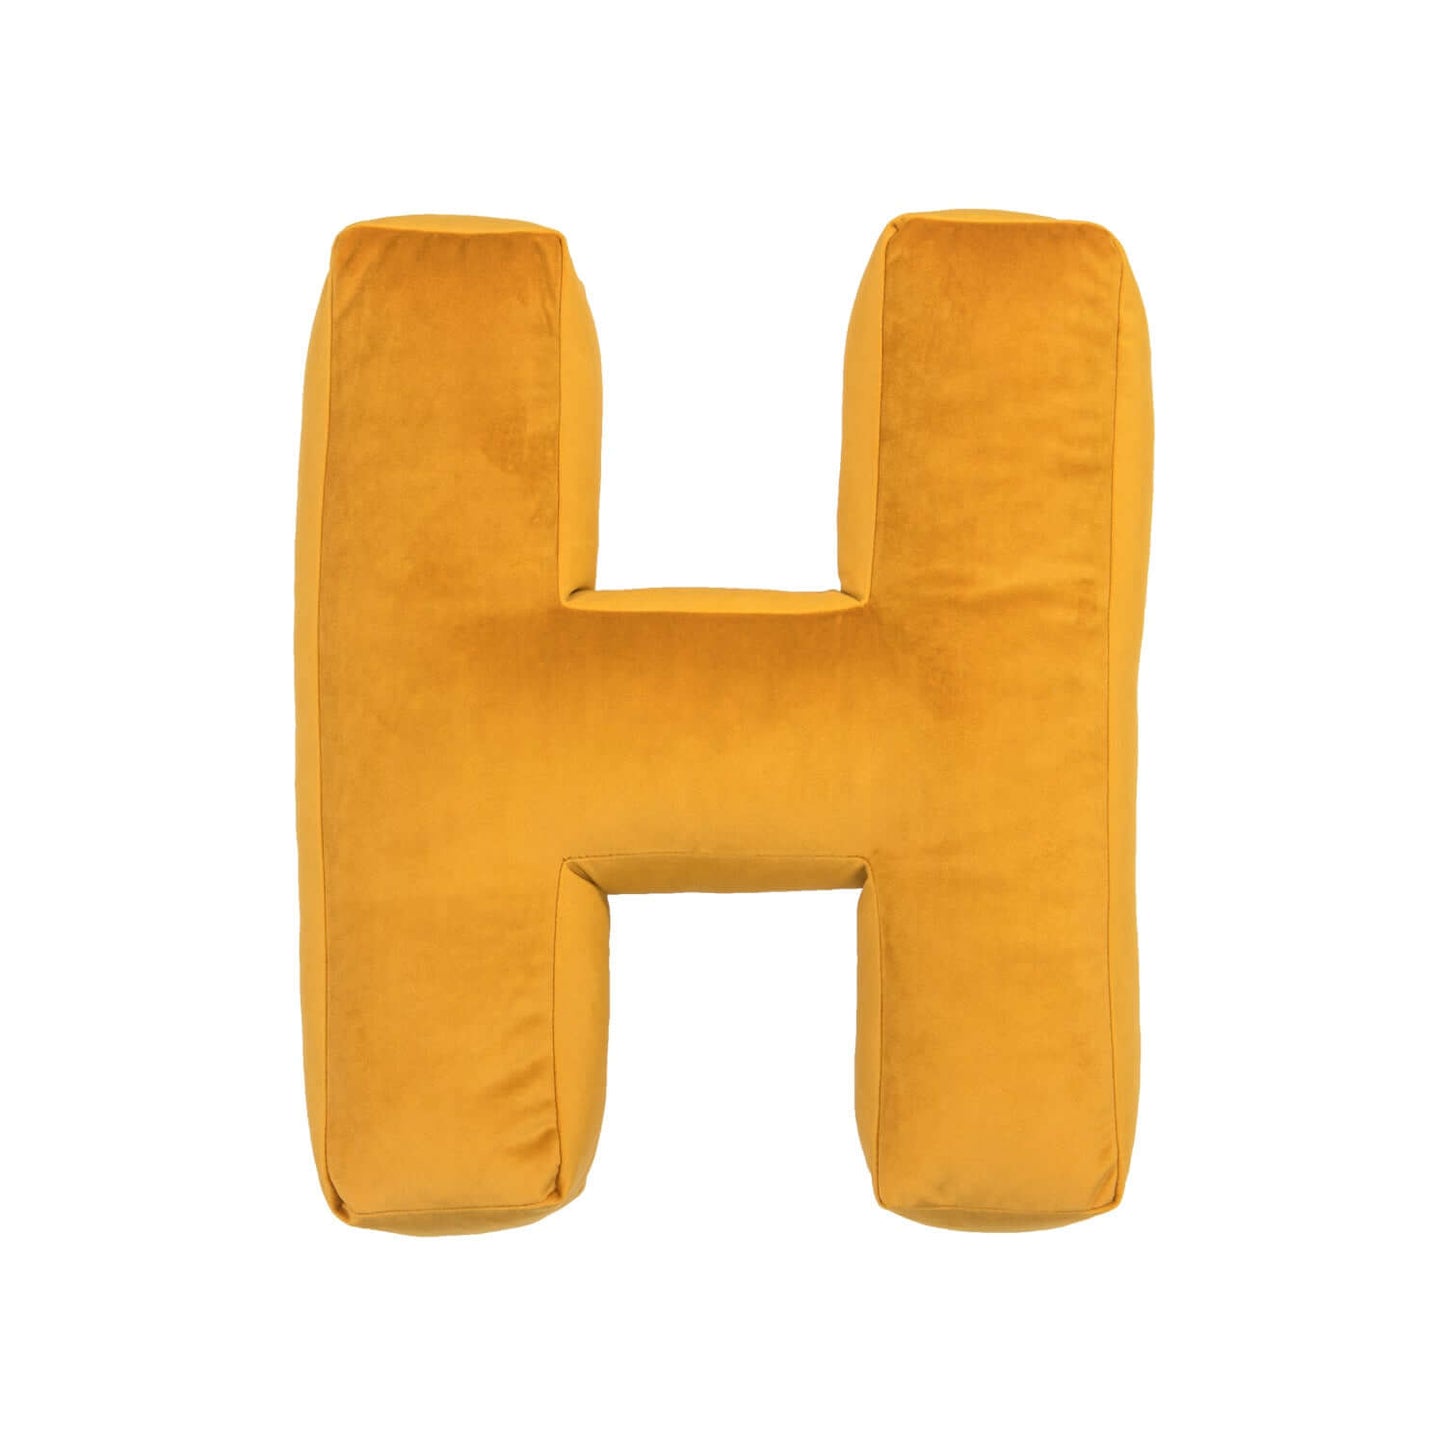 Poduszka literka welurowa H żółta od Bettys Home